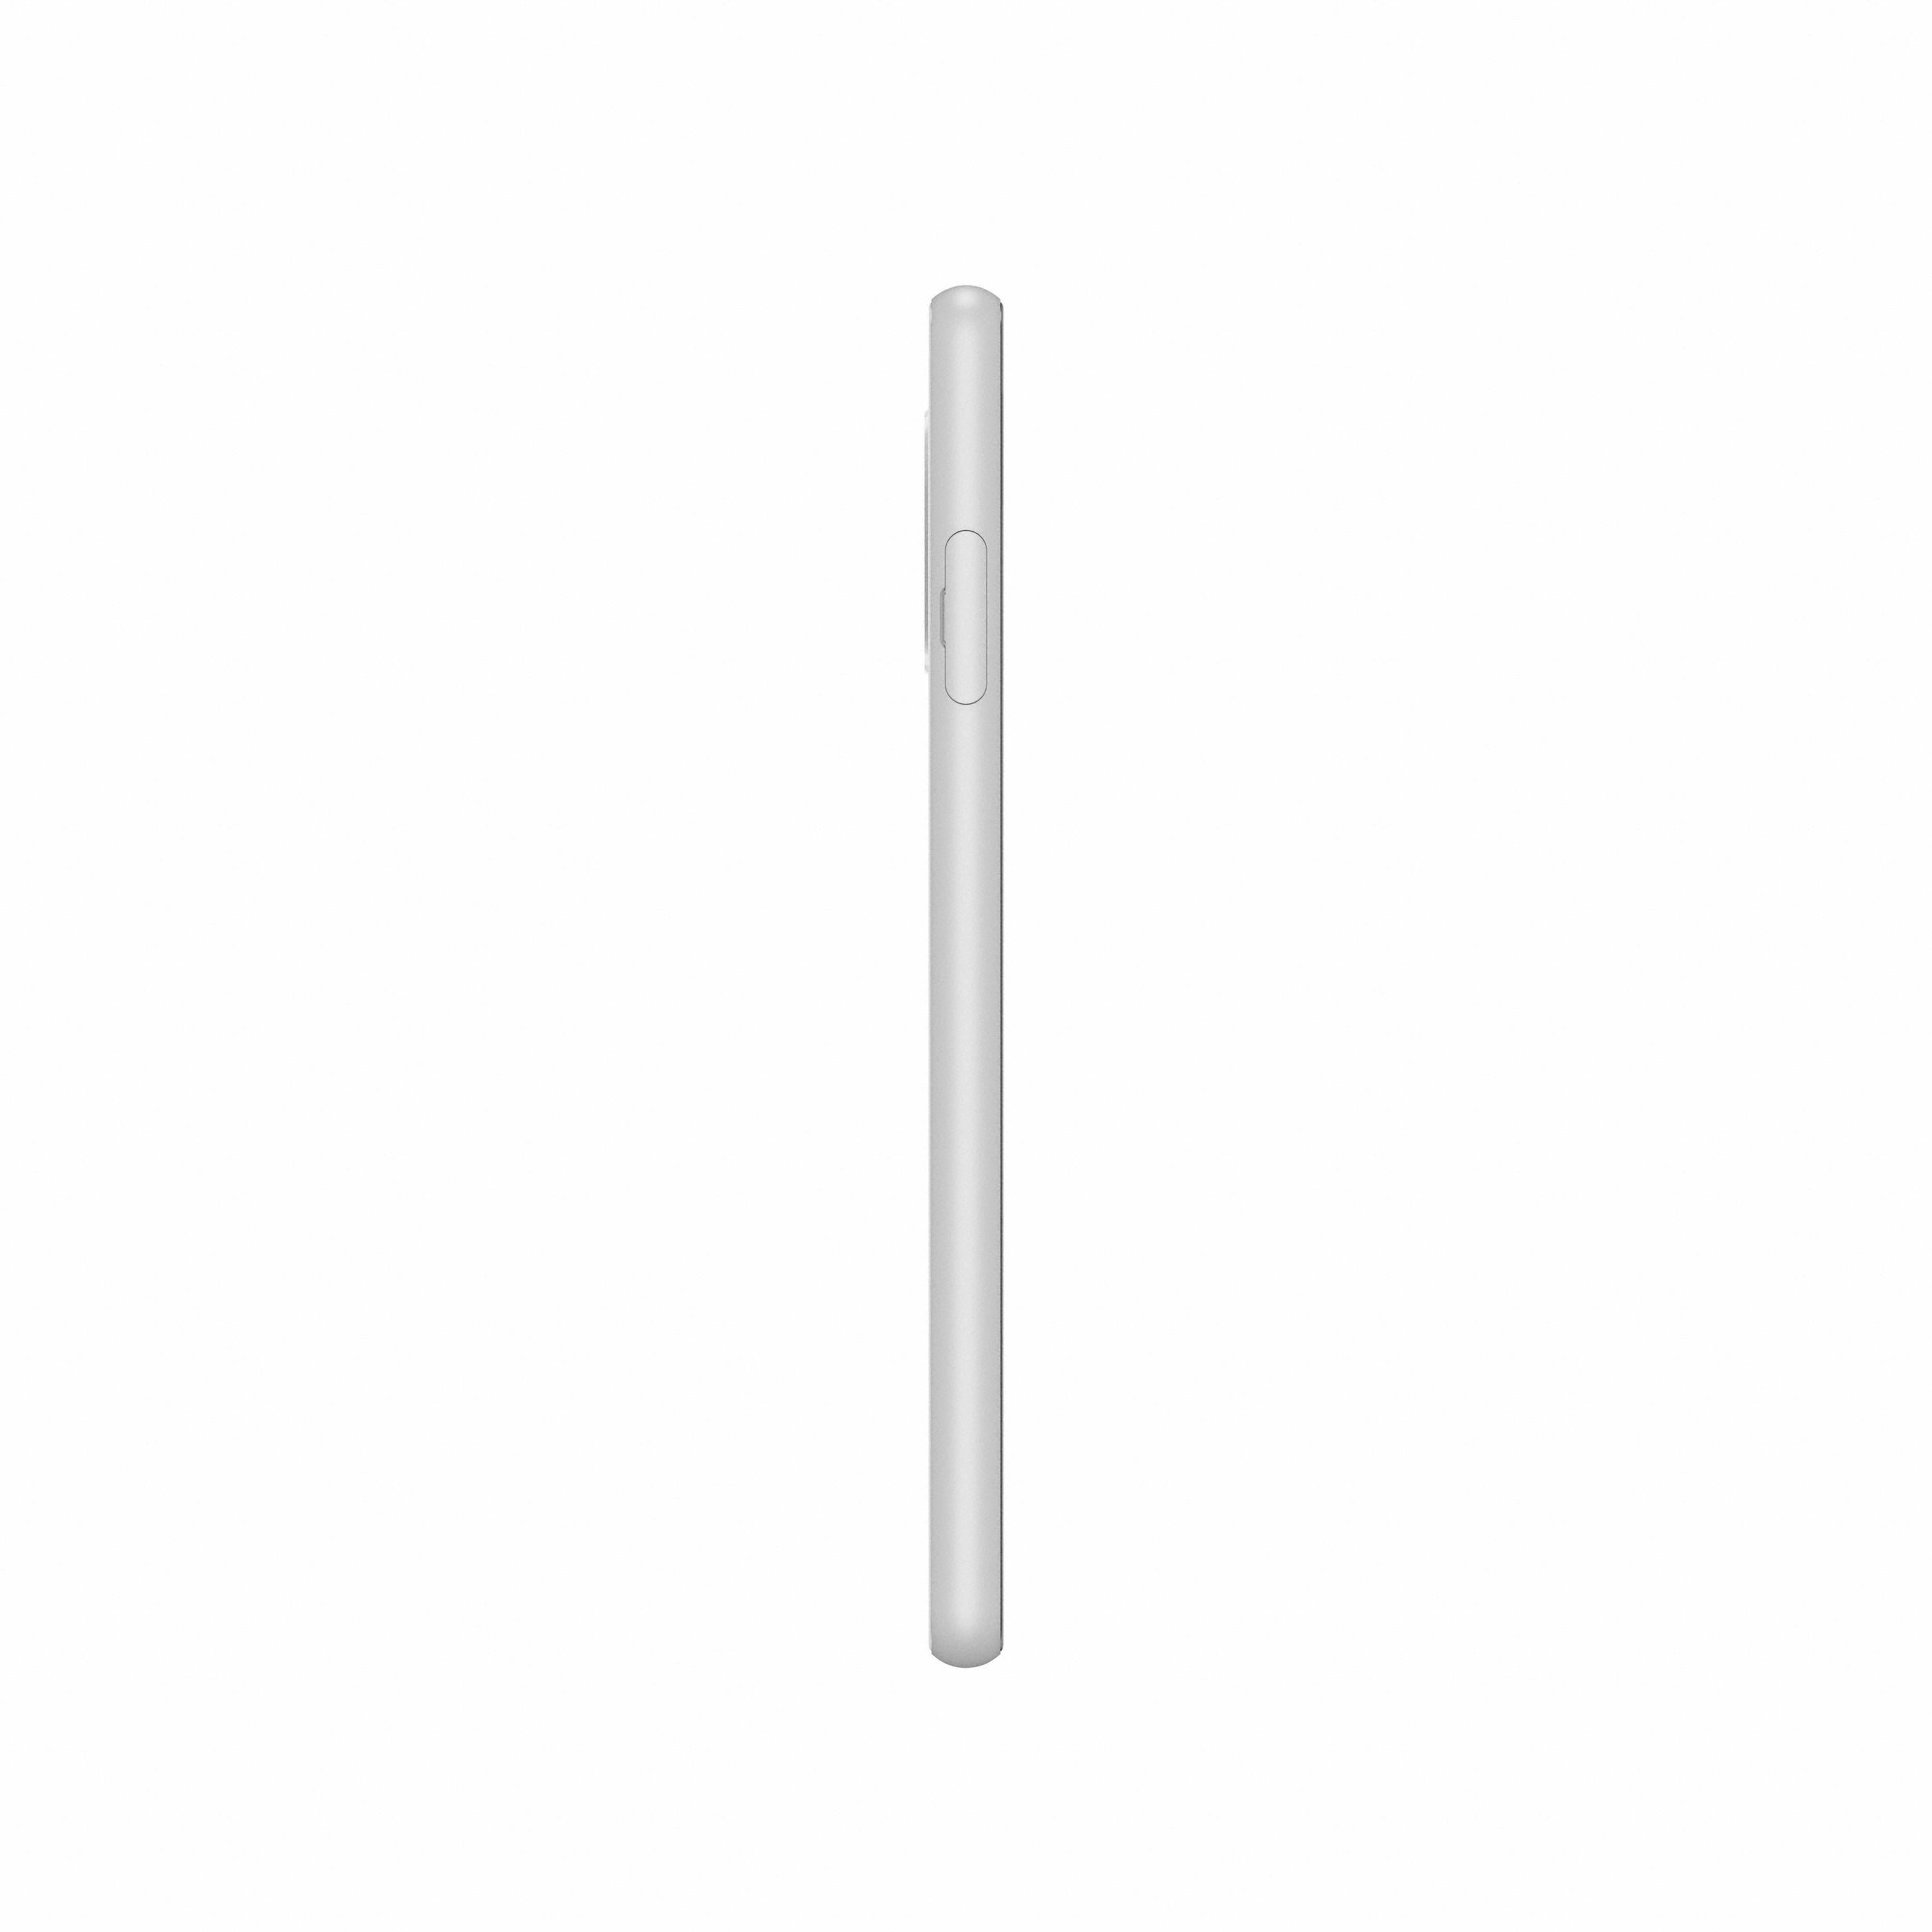 Xperia 10 SONY 128 5G 21:9 GB Weiß III Display SIM Dual